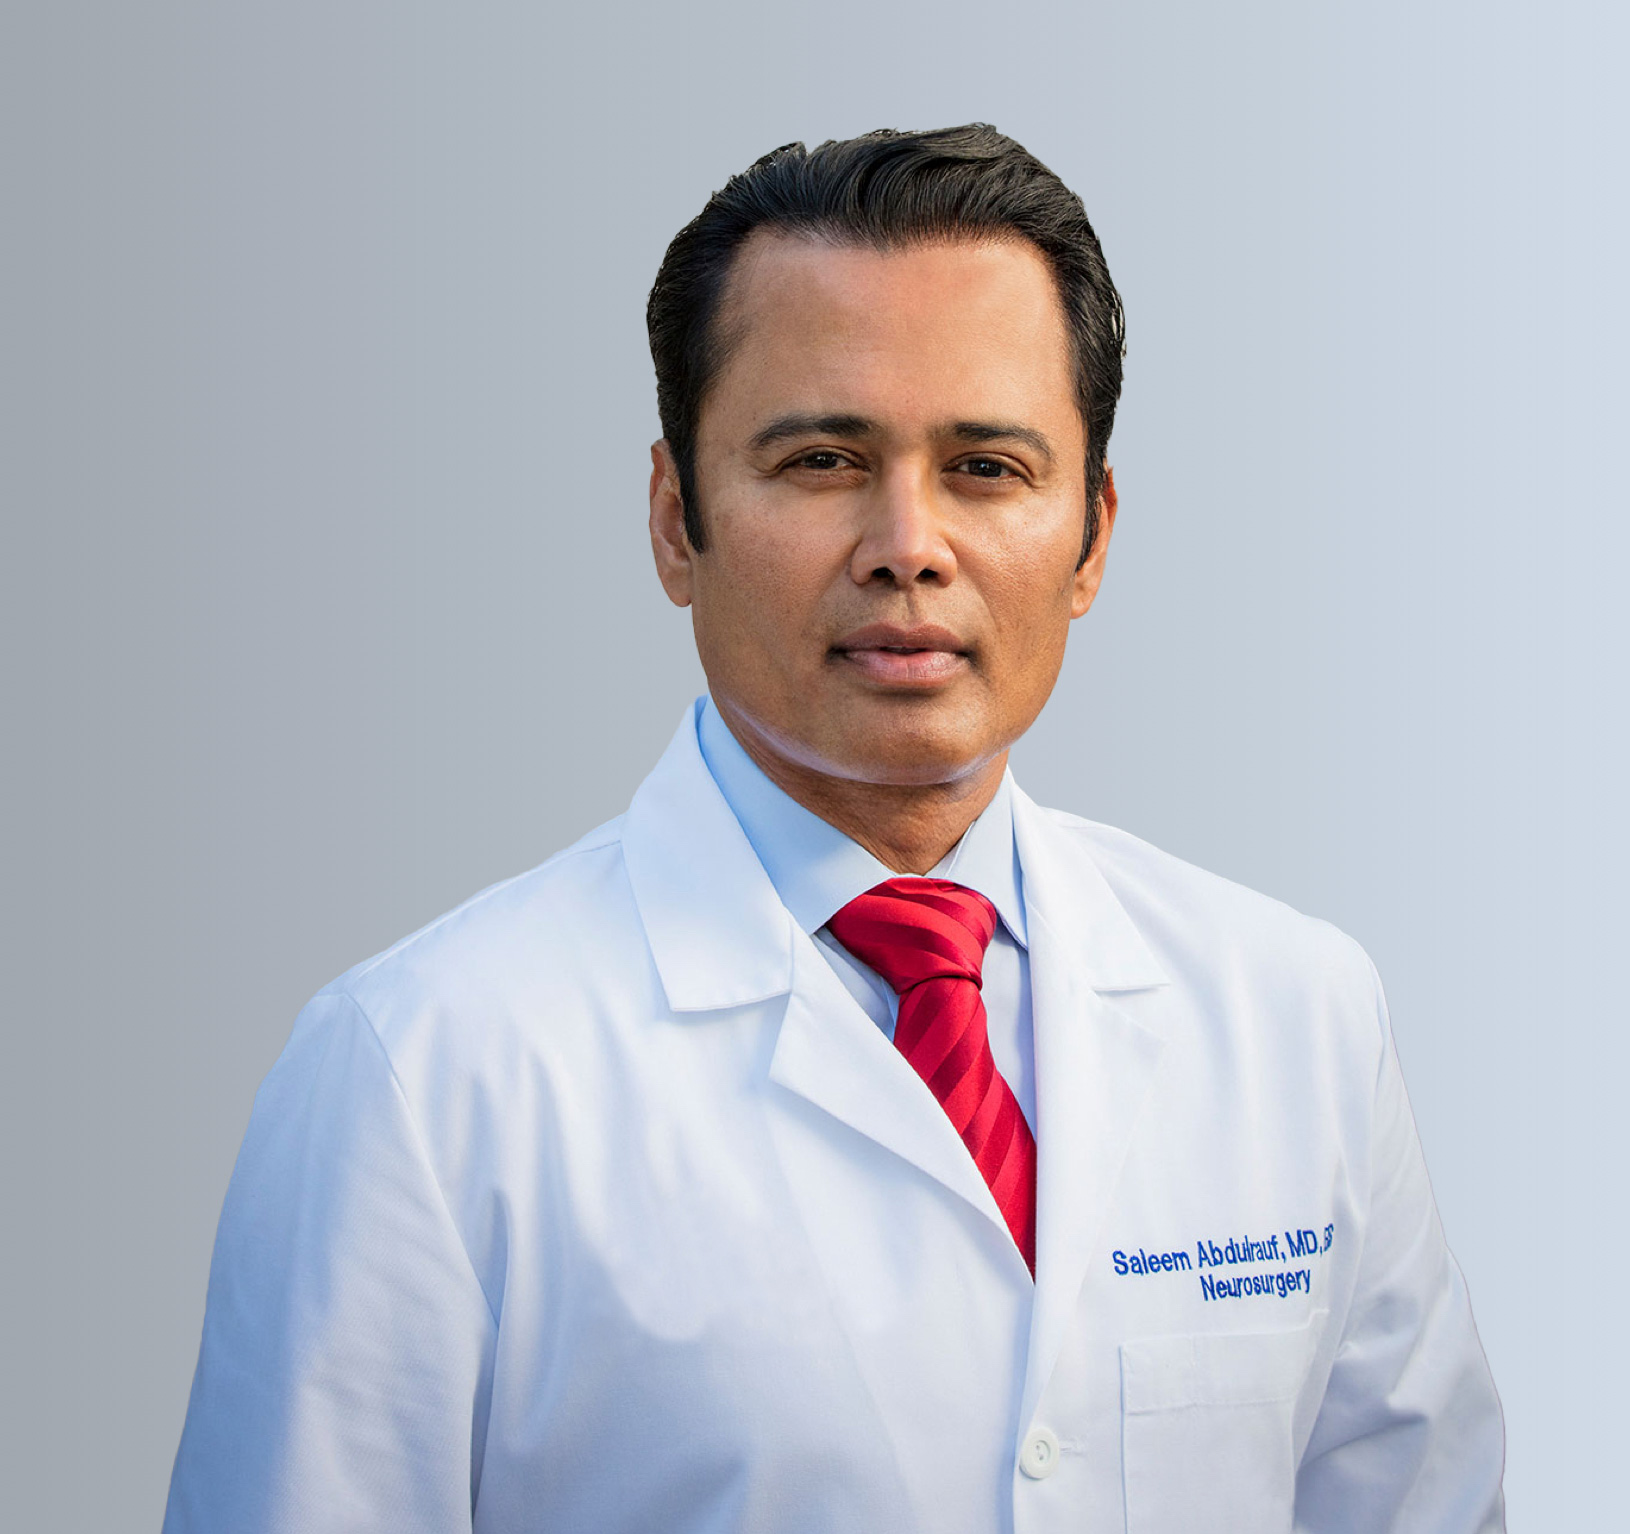 Dr. Saleem Abdulrauf